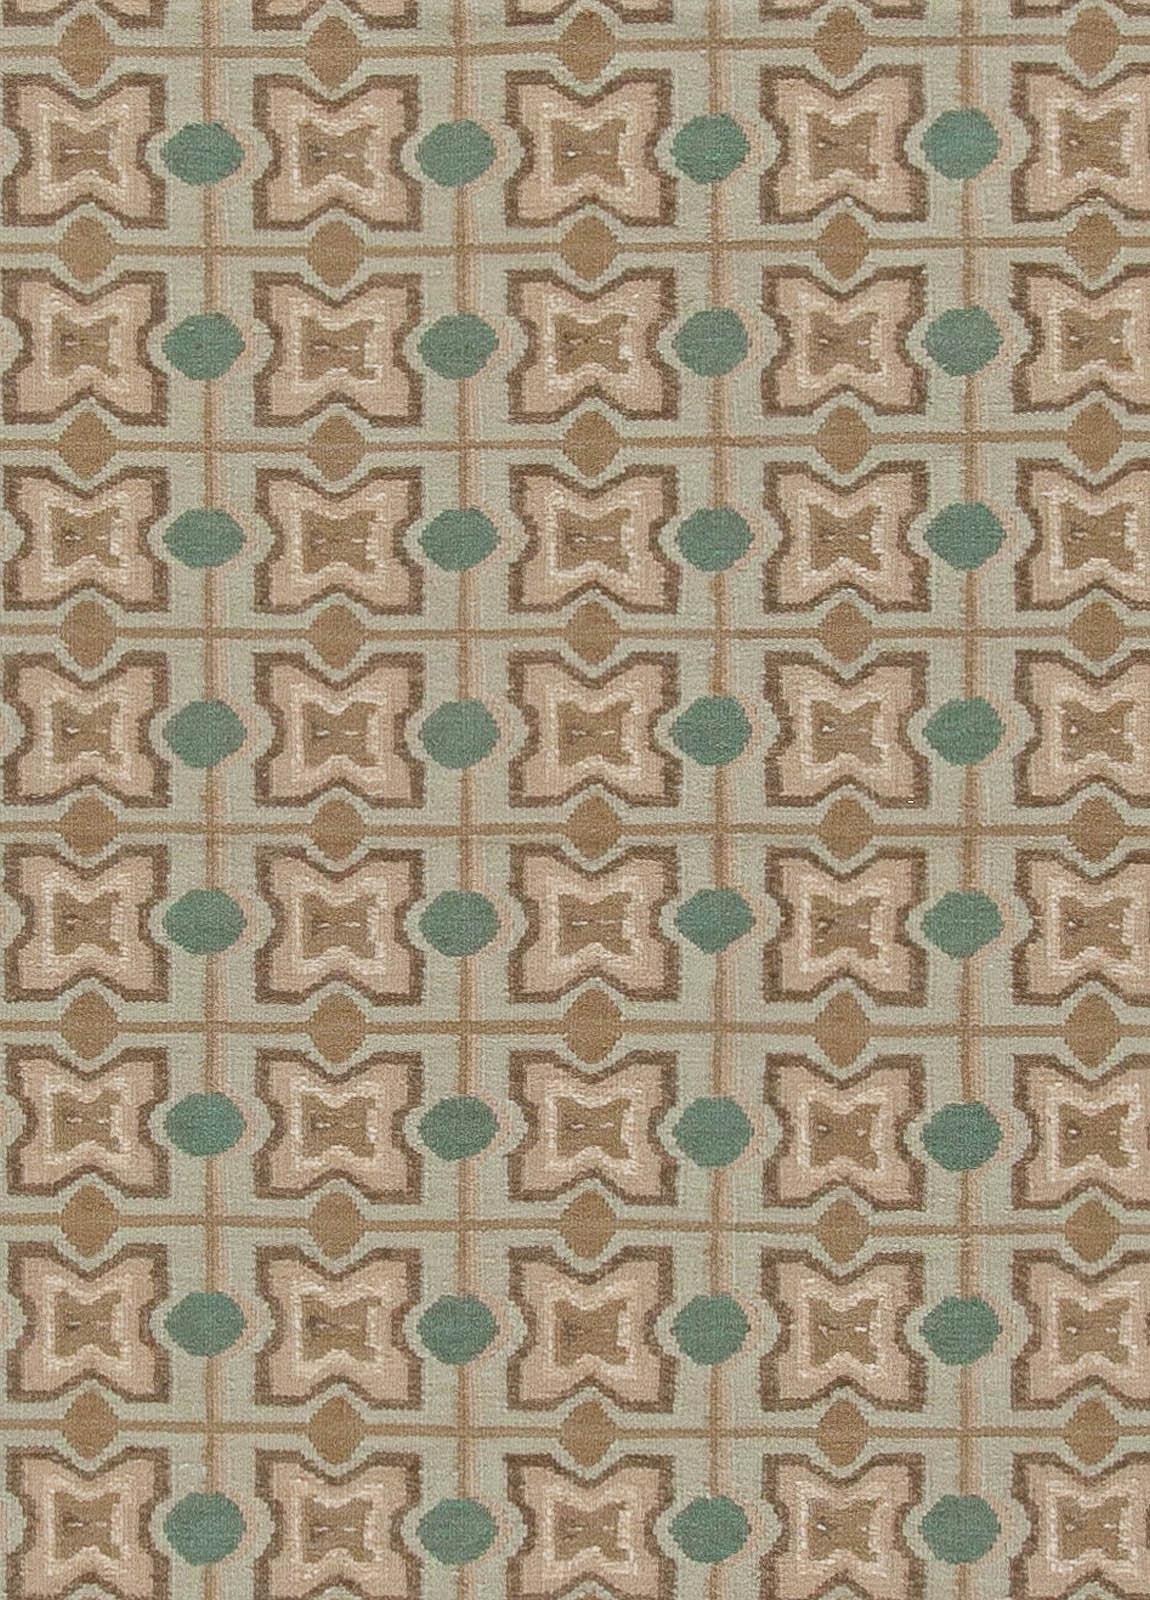 Oversized geometric flat weave wool rug by Doris Leslie Blau.
Size: 14'1